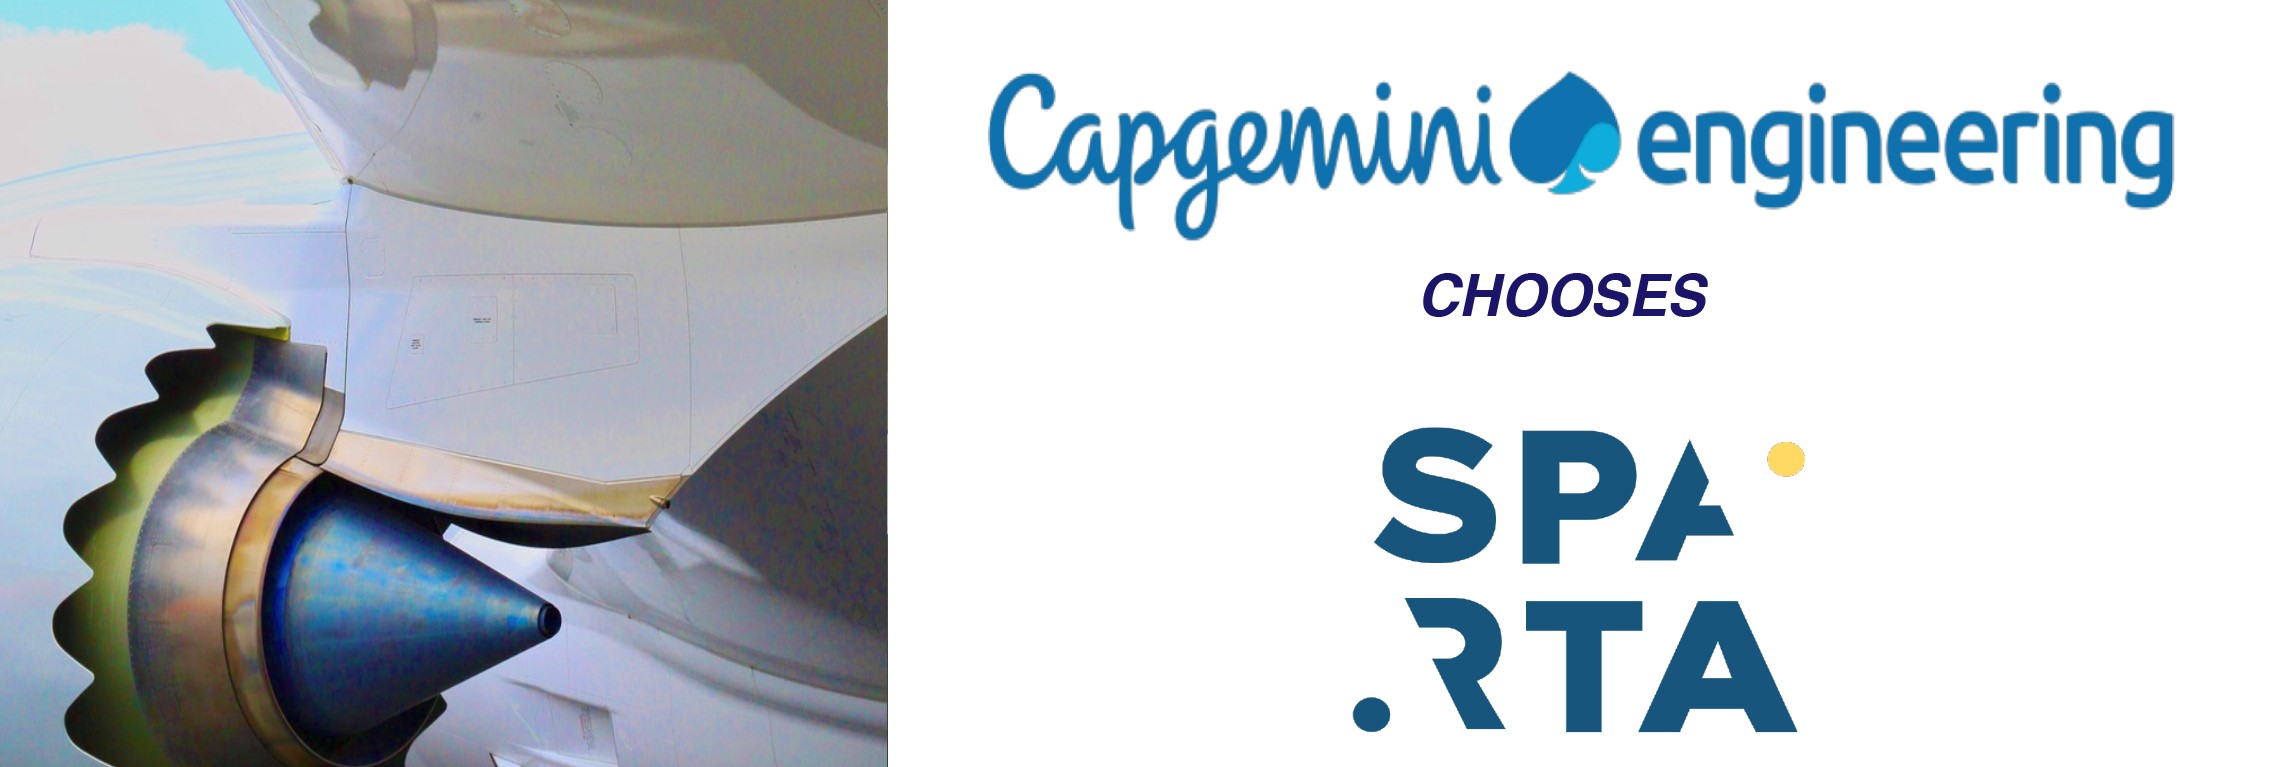 Capgemini Engineering Chooses SPARTA Enterprise Asset Management Software